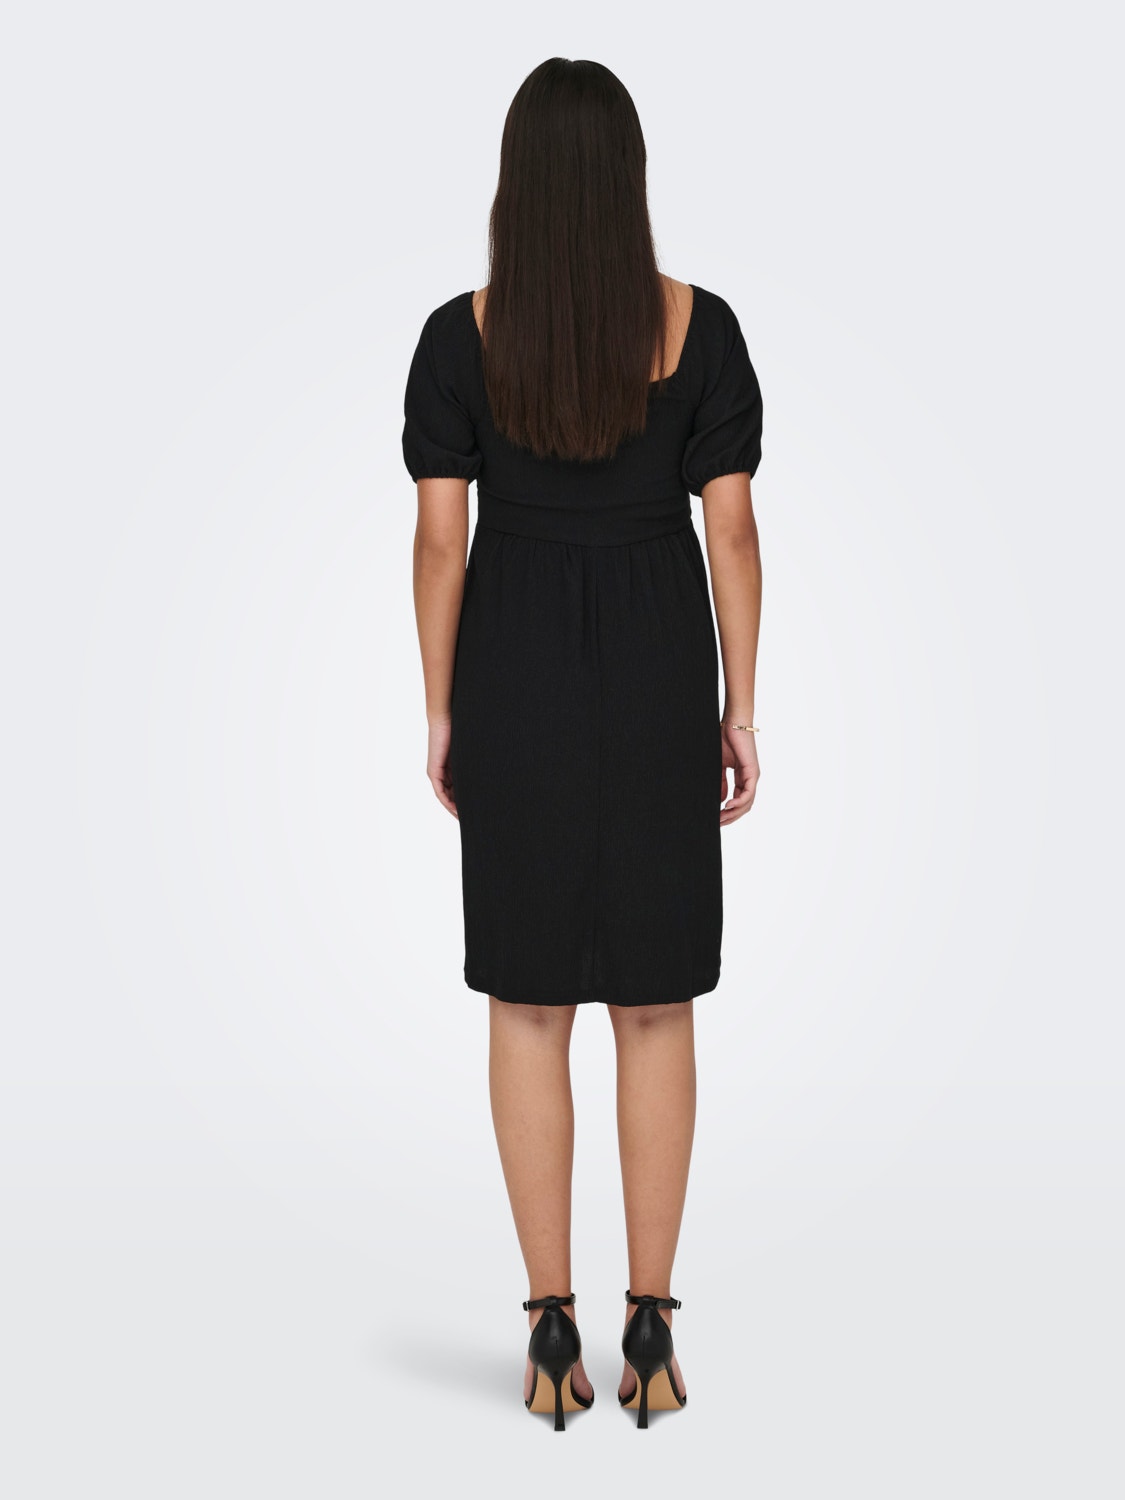 ONLY Loose Fit Square neck Short dress -Black - 15292097